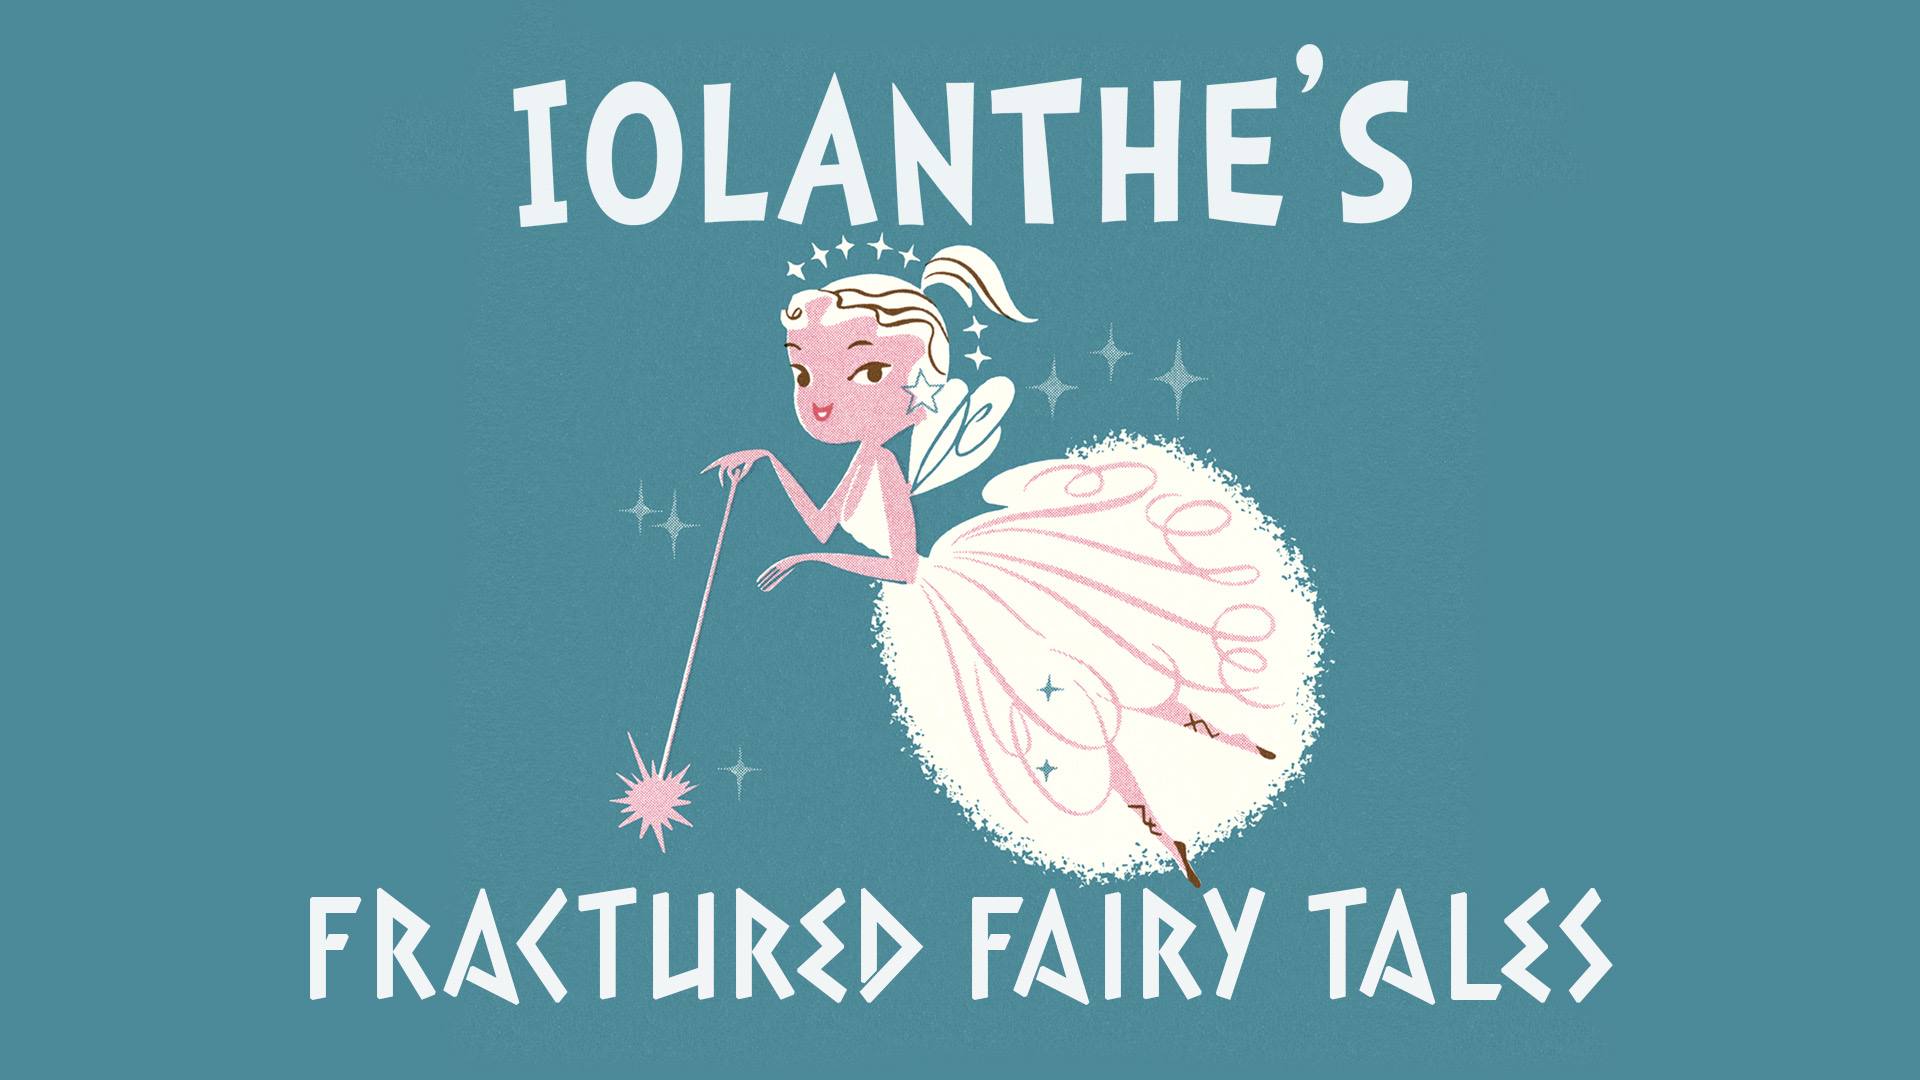 Iolanthe's Fractured Fairy Tales by Gilbert & Sullivan Austin